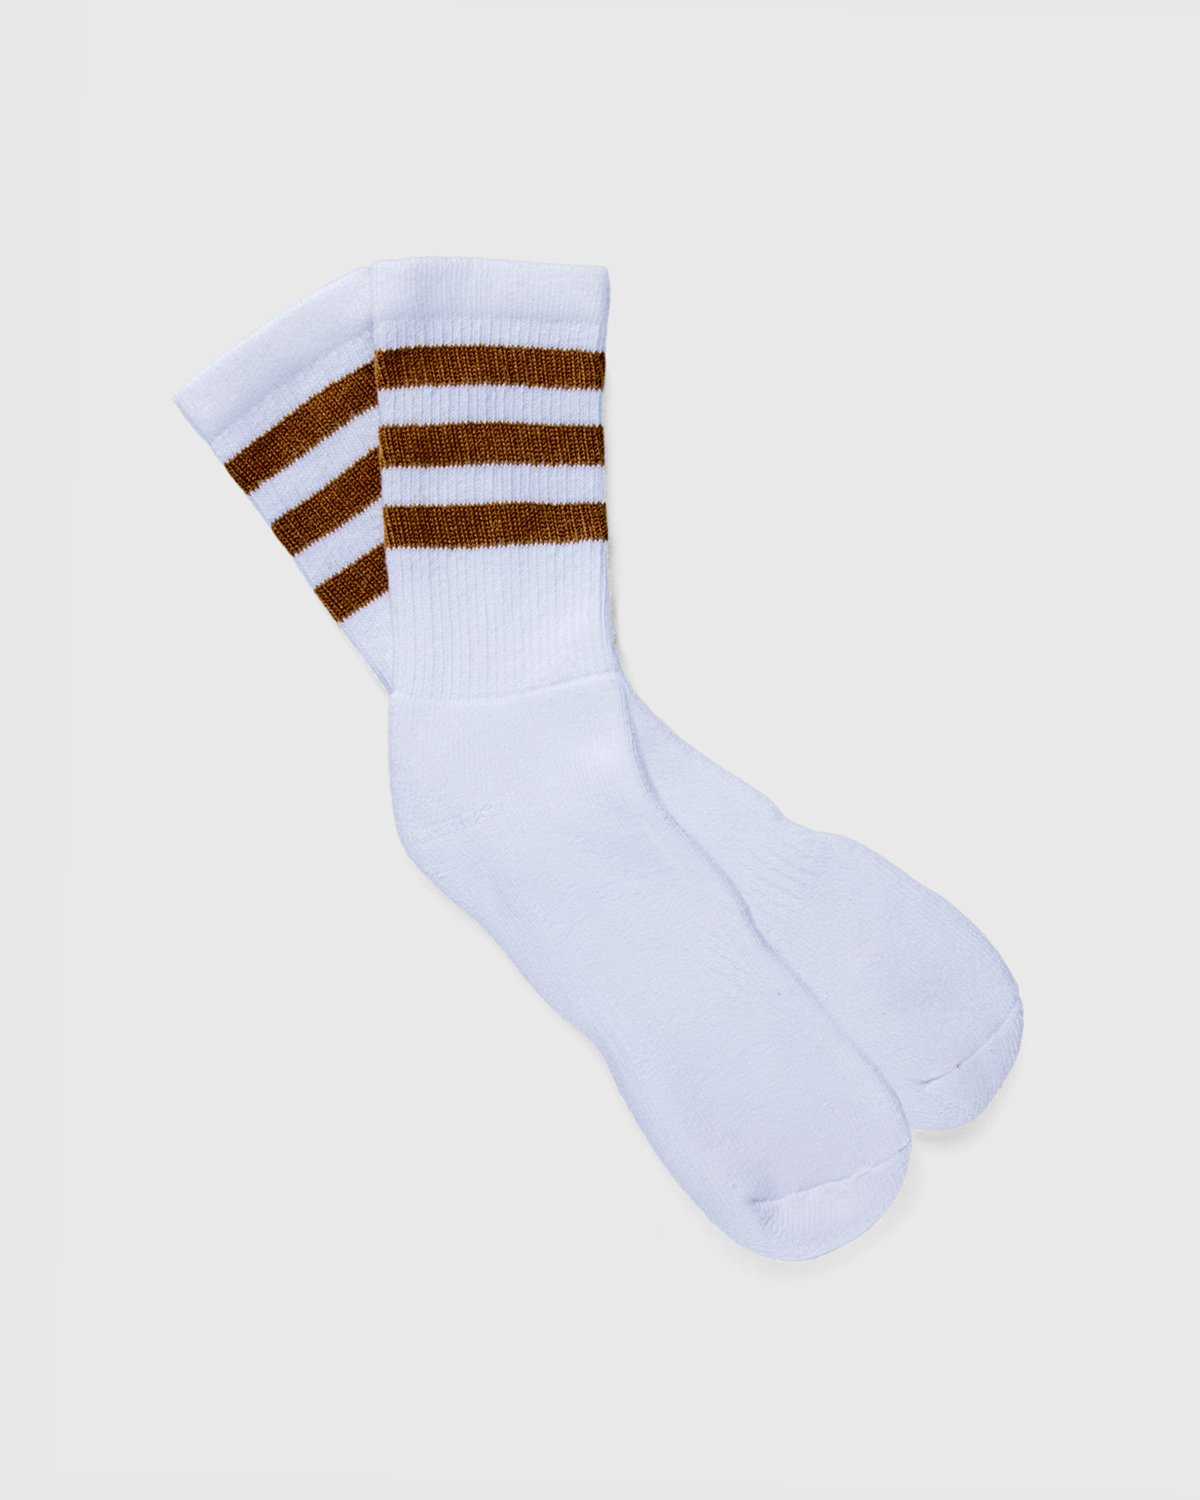 Darryl Brown - Sock Set Multicolour - Crew - Multi - Image 4